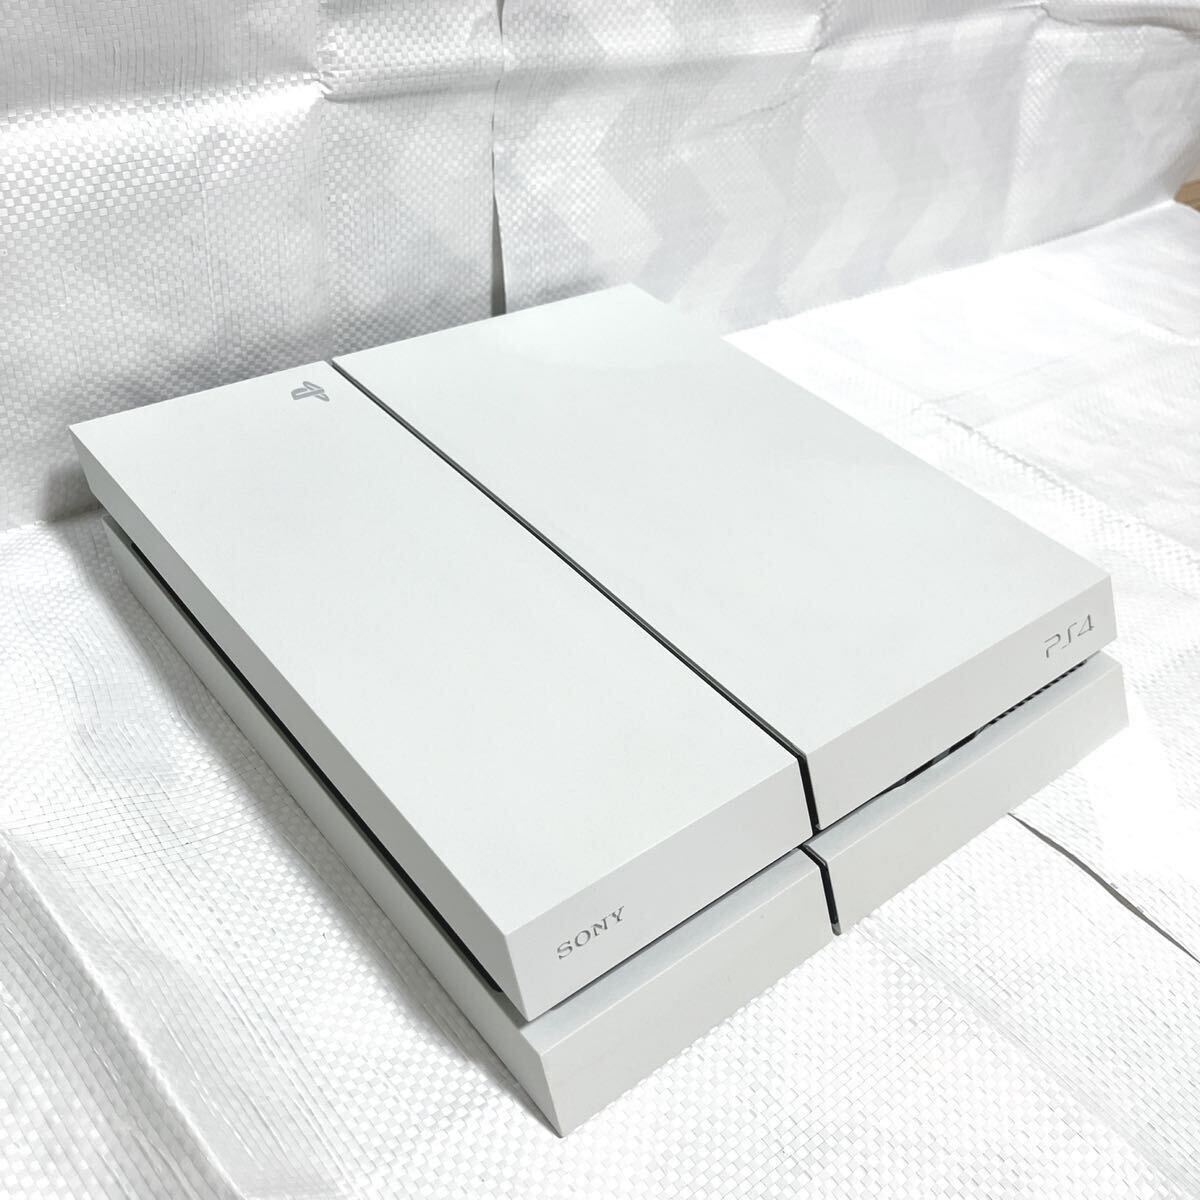  Sony SONY /PlayStation4 CUH-1200A / white / body 